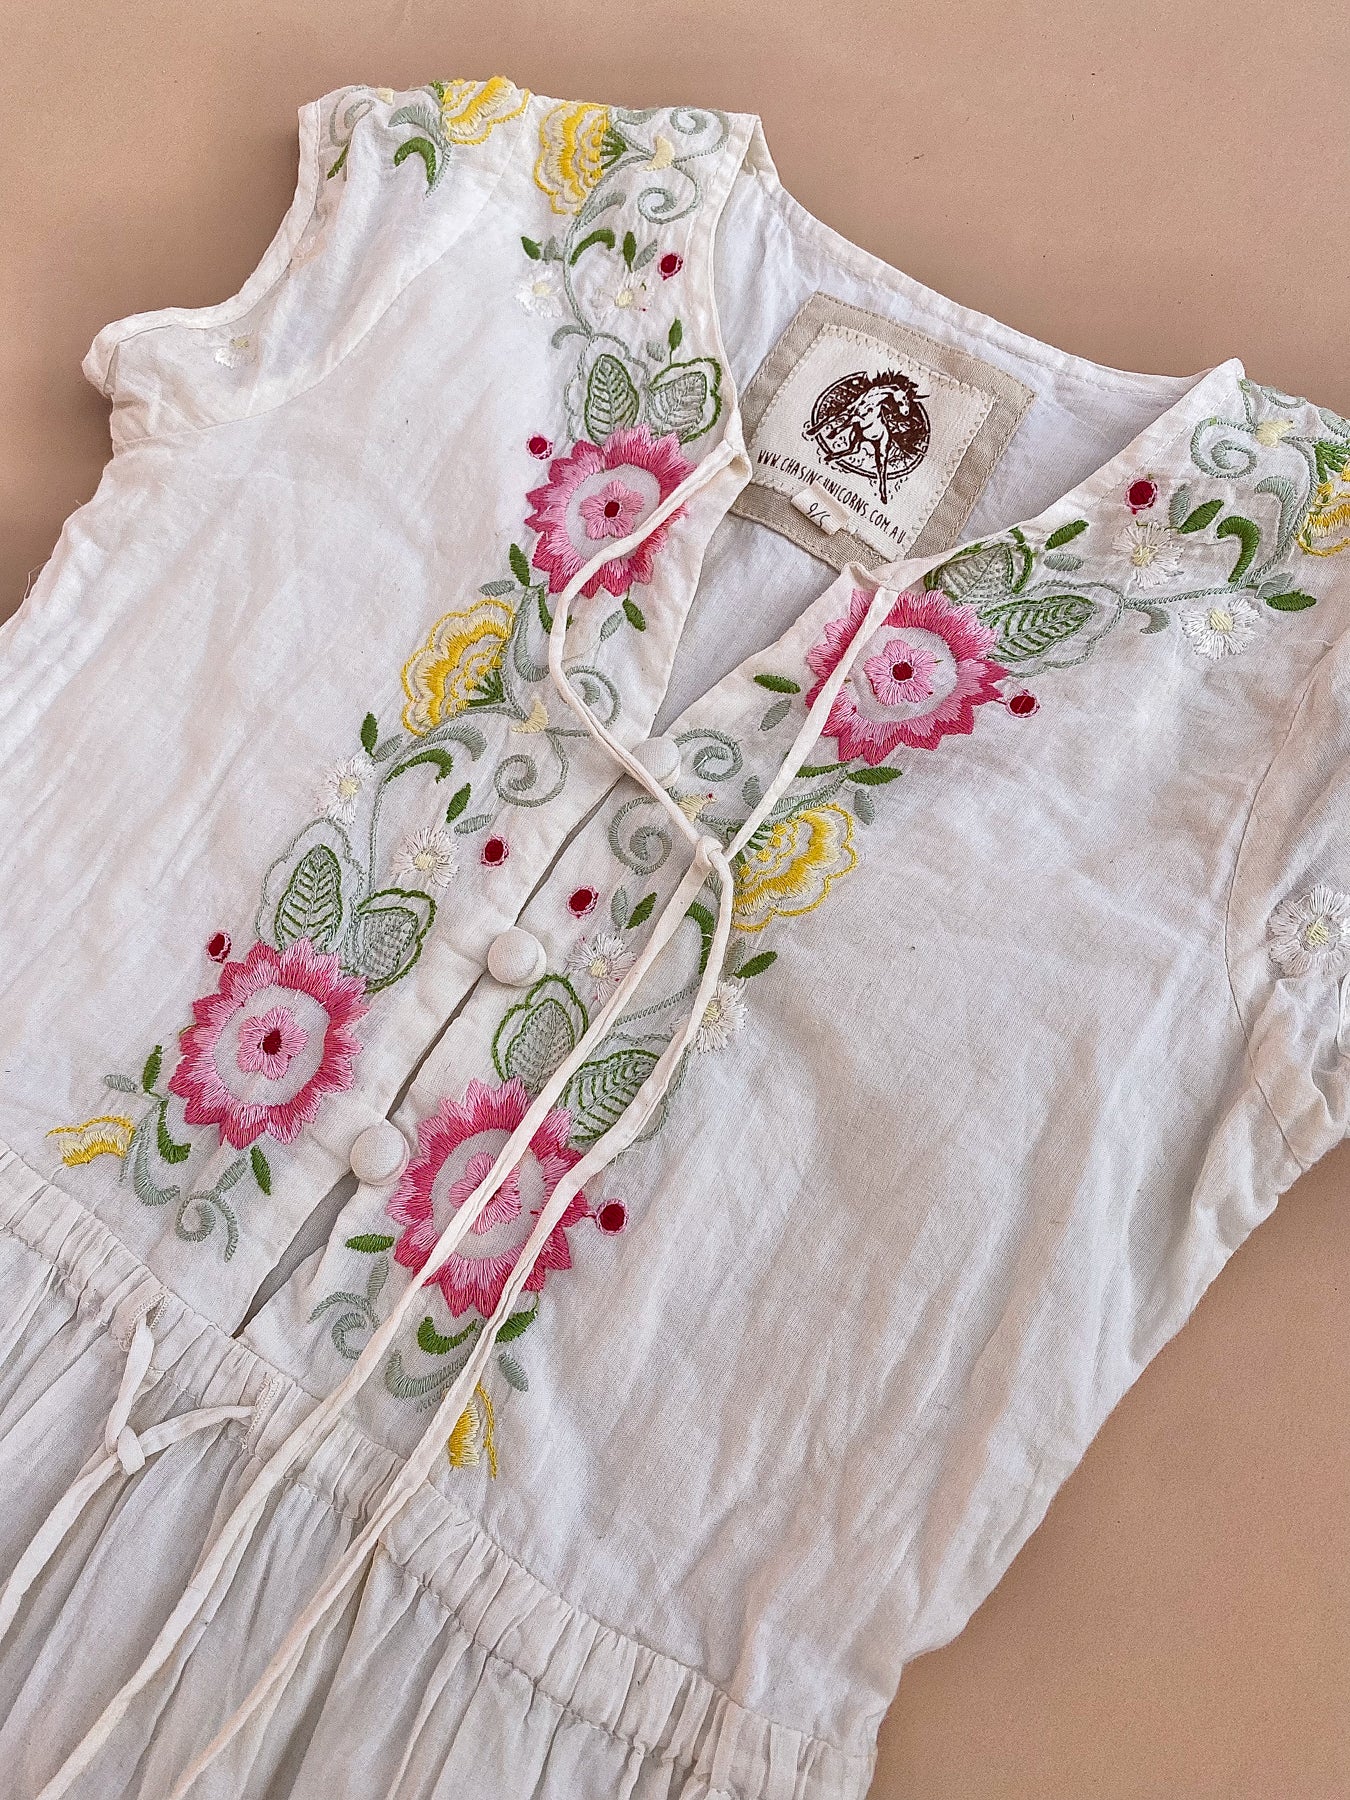 CHASING UNICORNS Kids Ivory Cotton Embroidered Maxi Dress 5-7